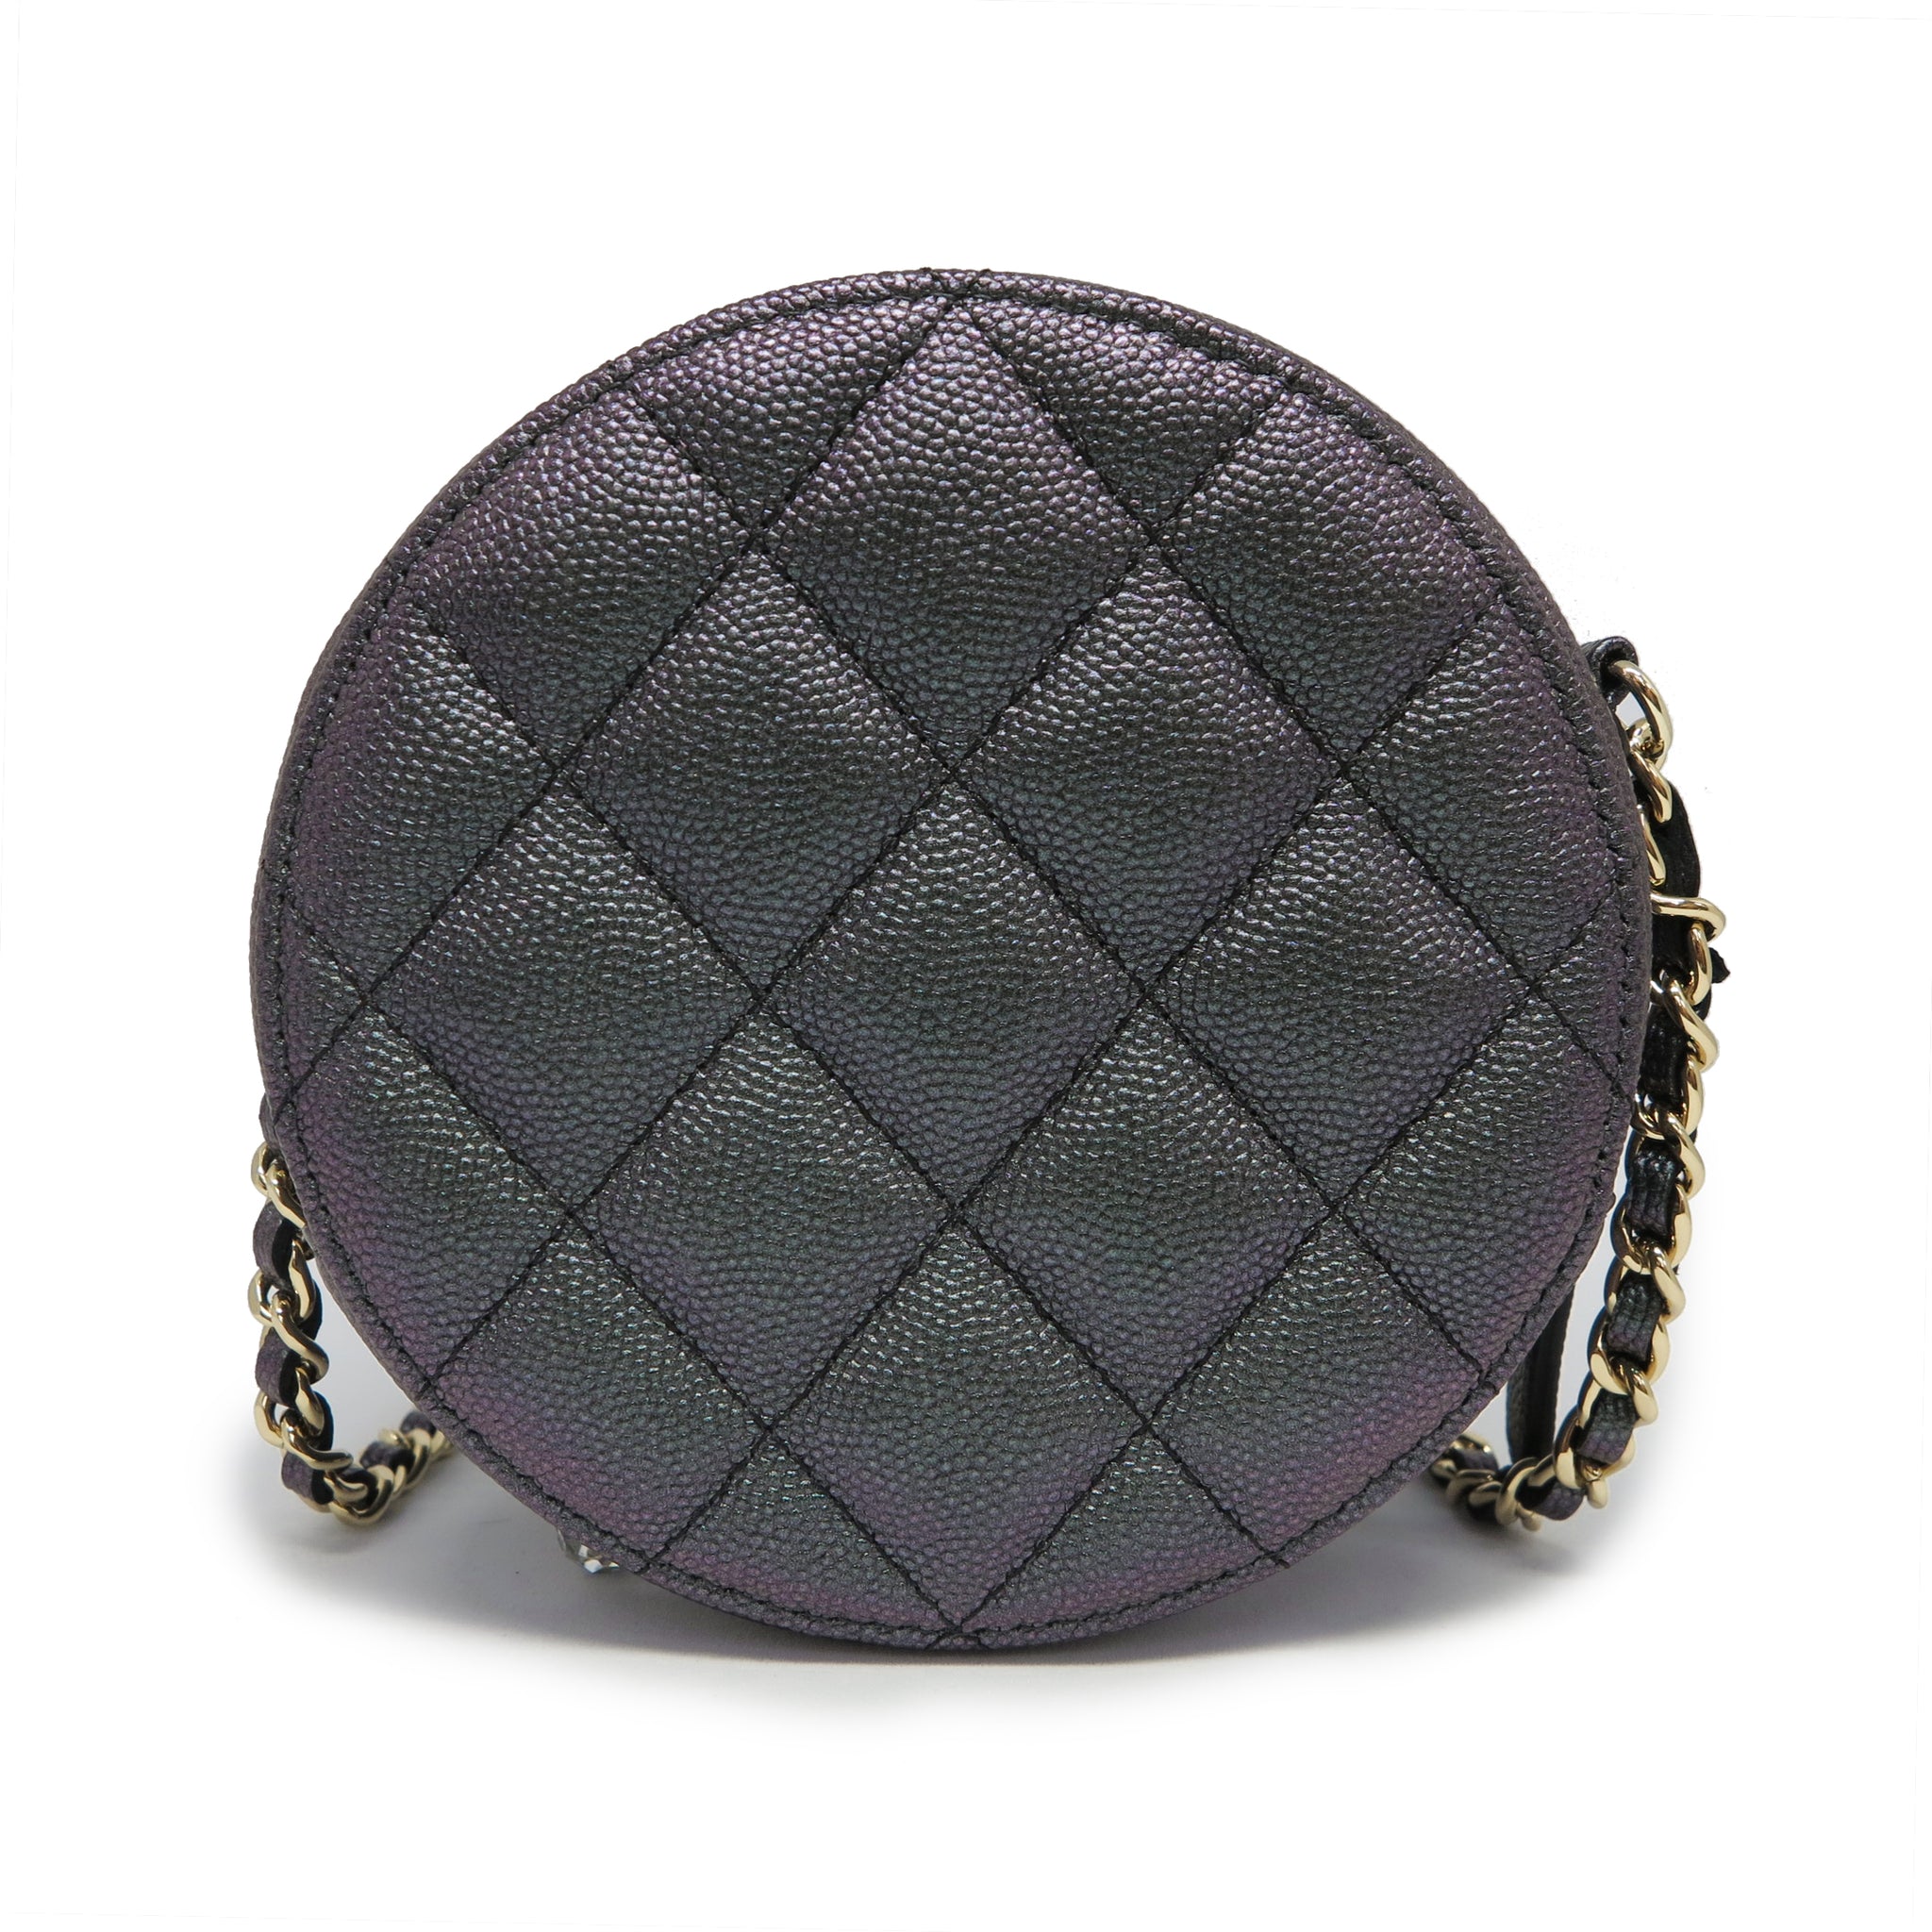 Chanel Vanity Square Mini Black Caviar Leather, Gold Hardware, New in Box